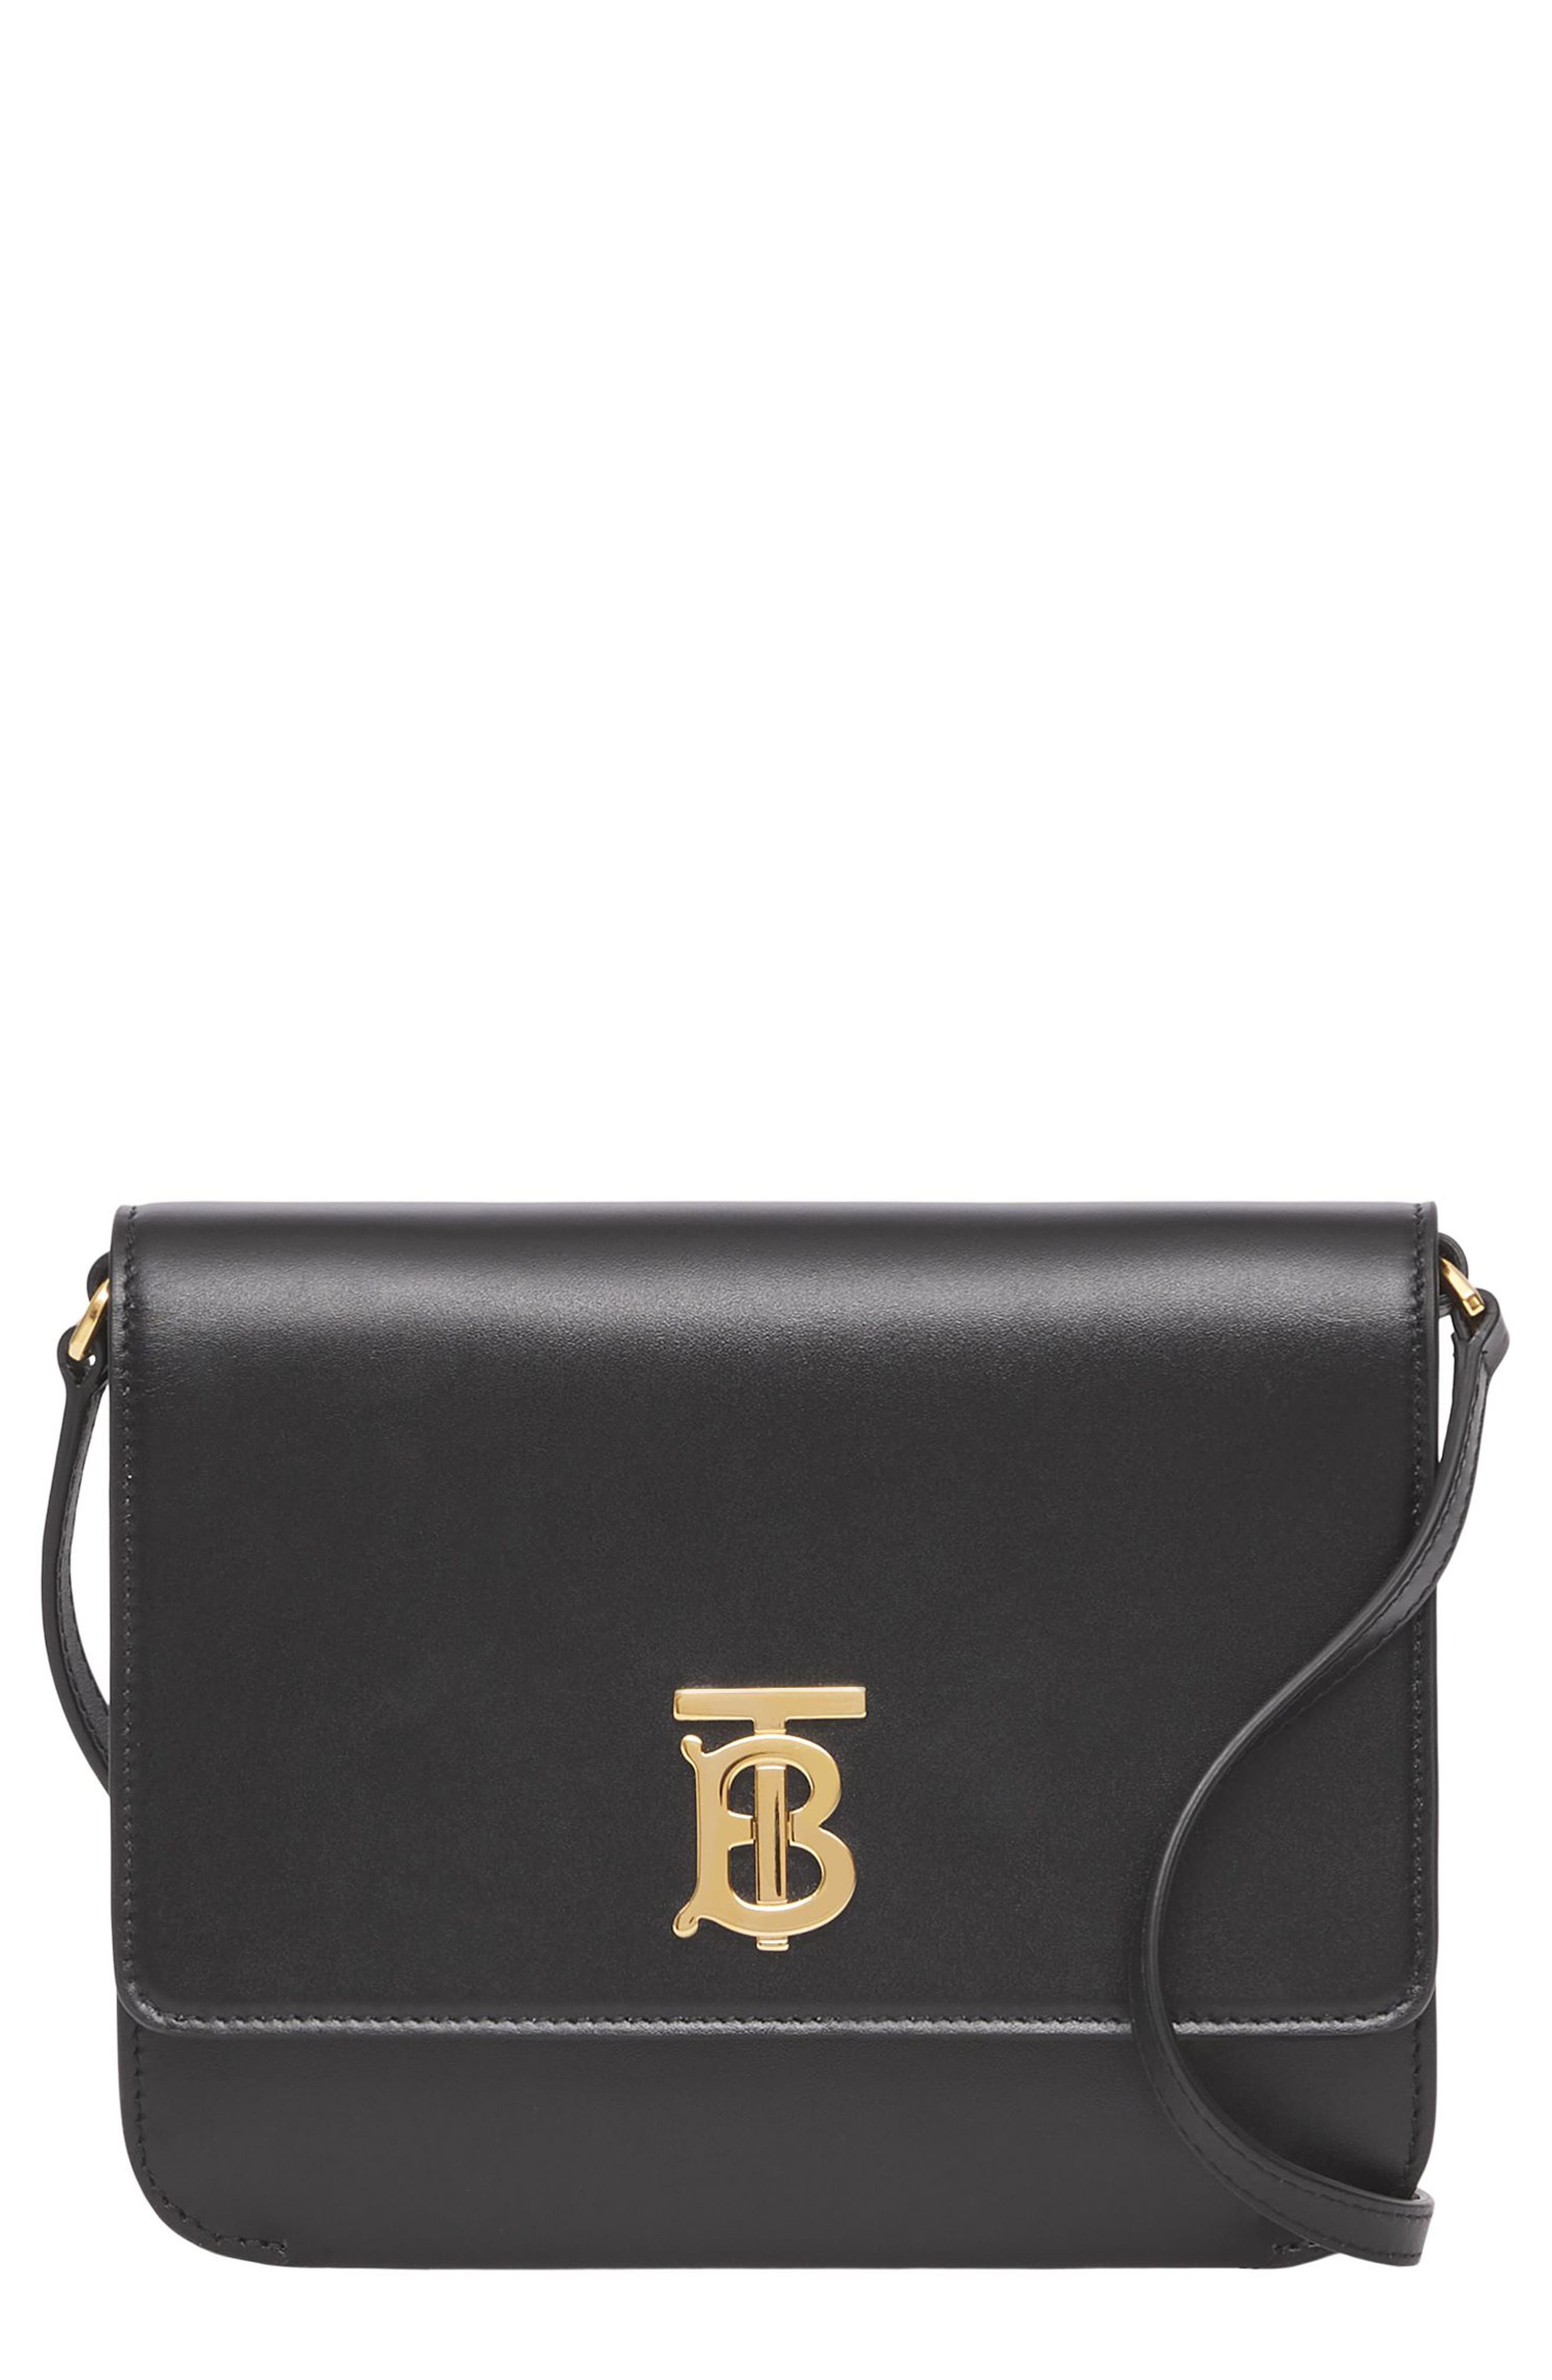 Burberry Mini Square TB Monogram Leather Crossbody Bag in Black at Nordstrom